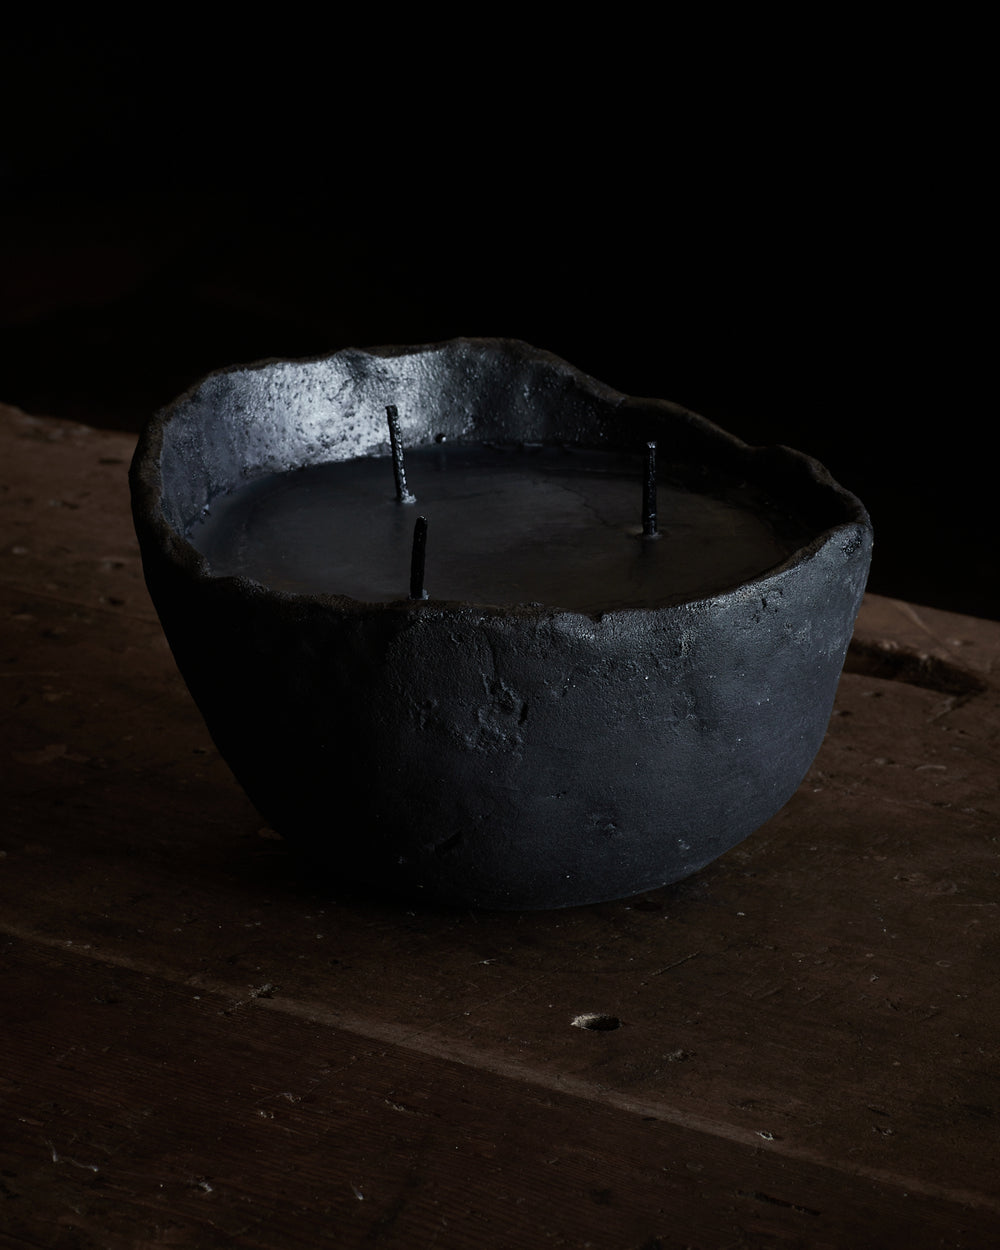 The Ritual Bowl